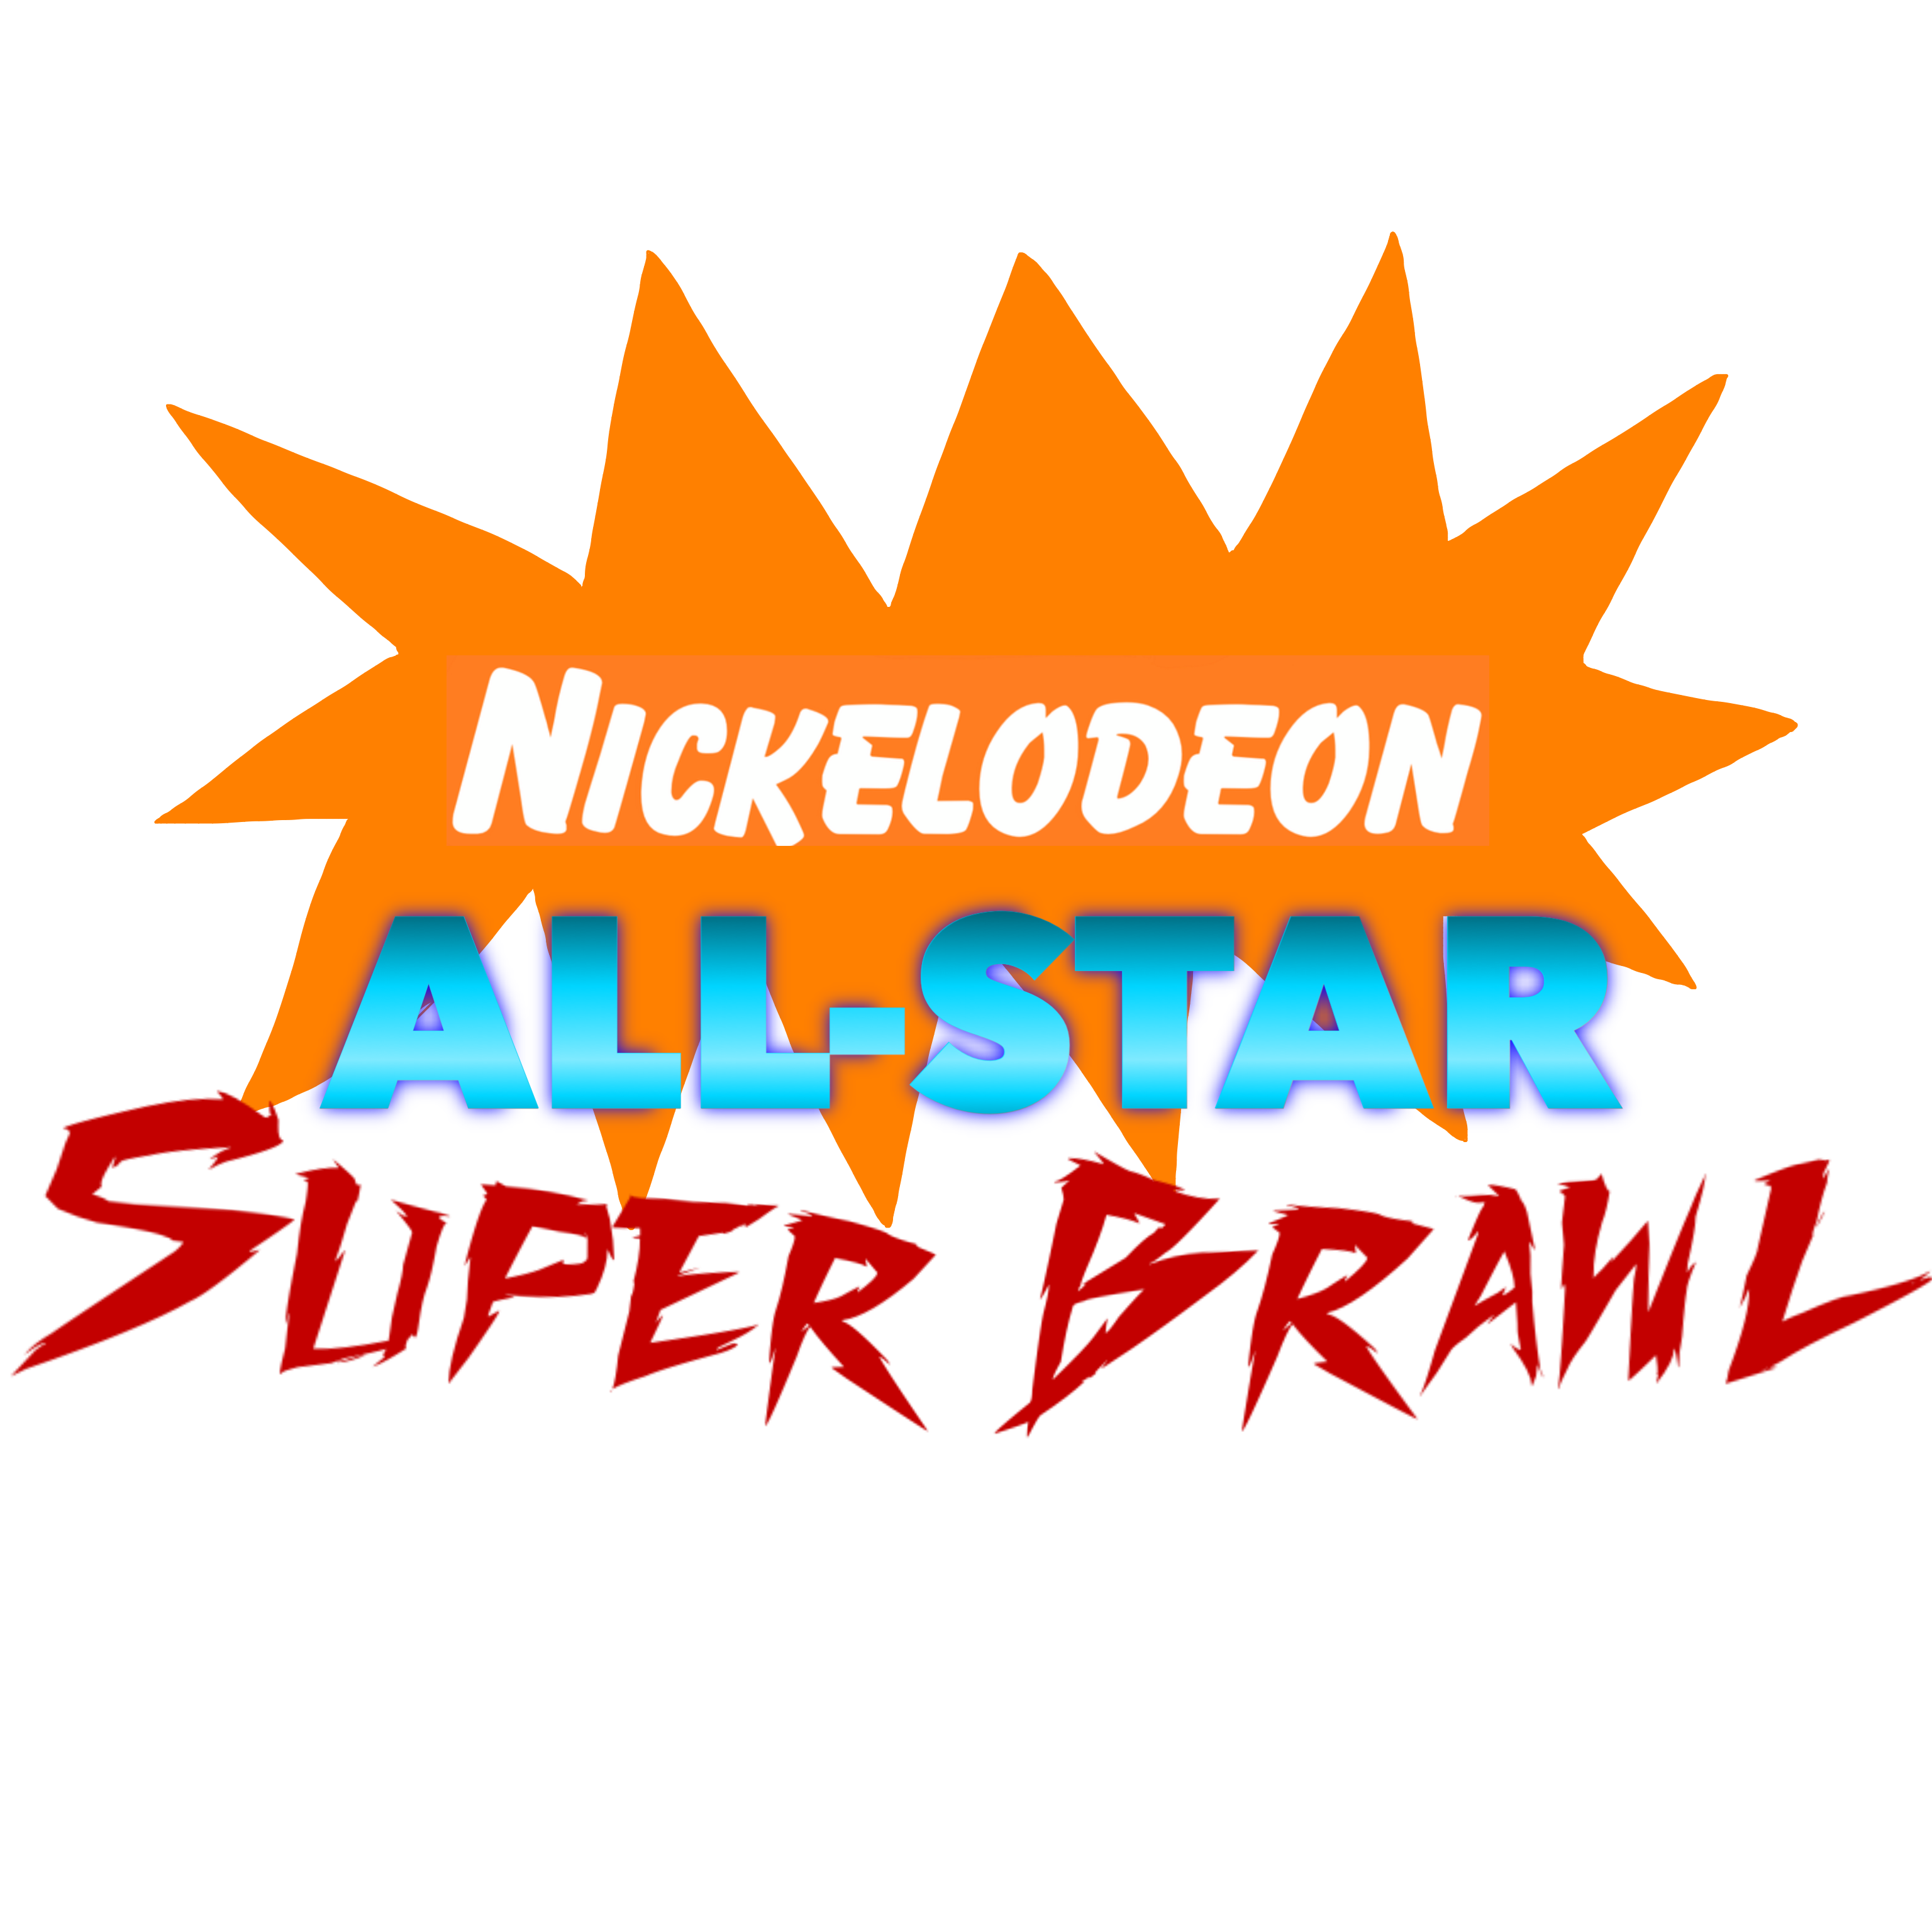 Fanboy (Super Brawl), Nickelodeon Super Brawl Wiki